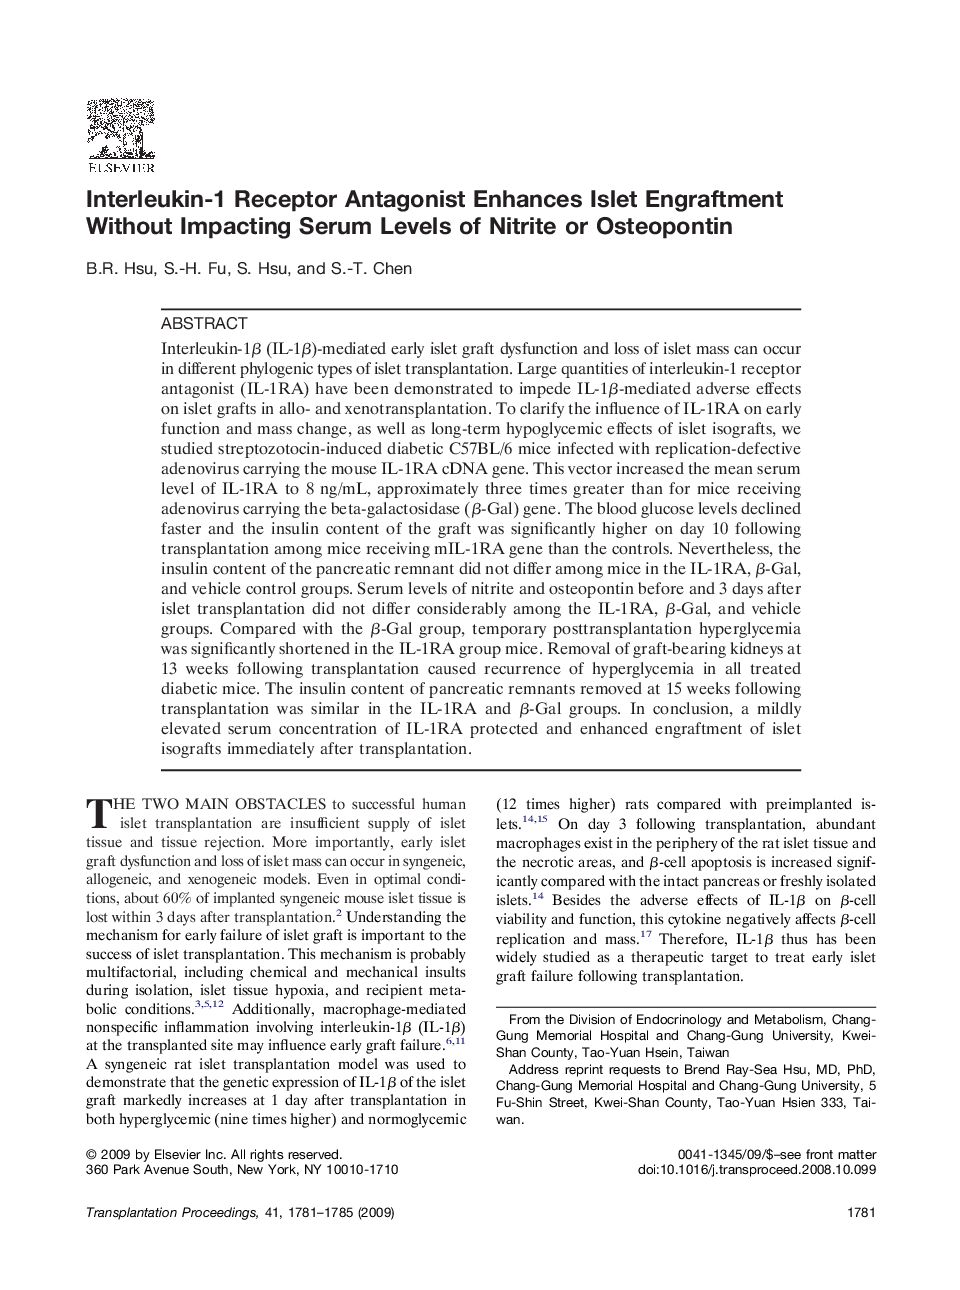 Interleukin-1 Receptor Antagonist Enhances Islet Engraftment Without Impacting Serum Levels of Nitrite or Osteopontin